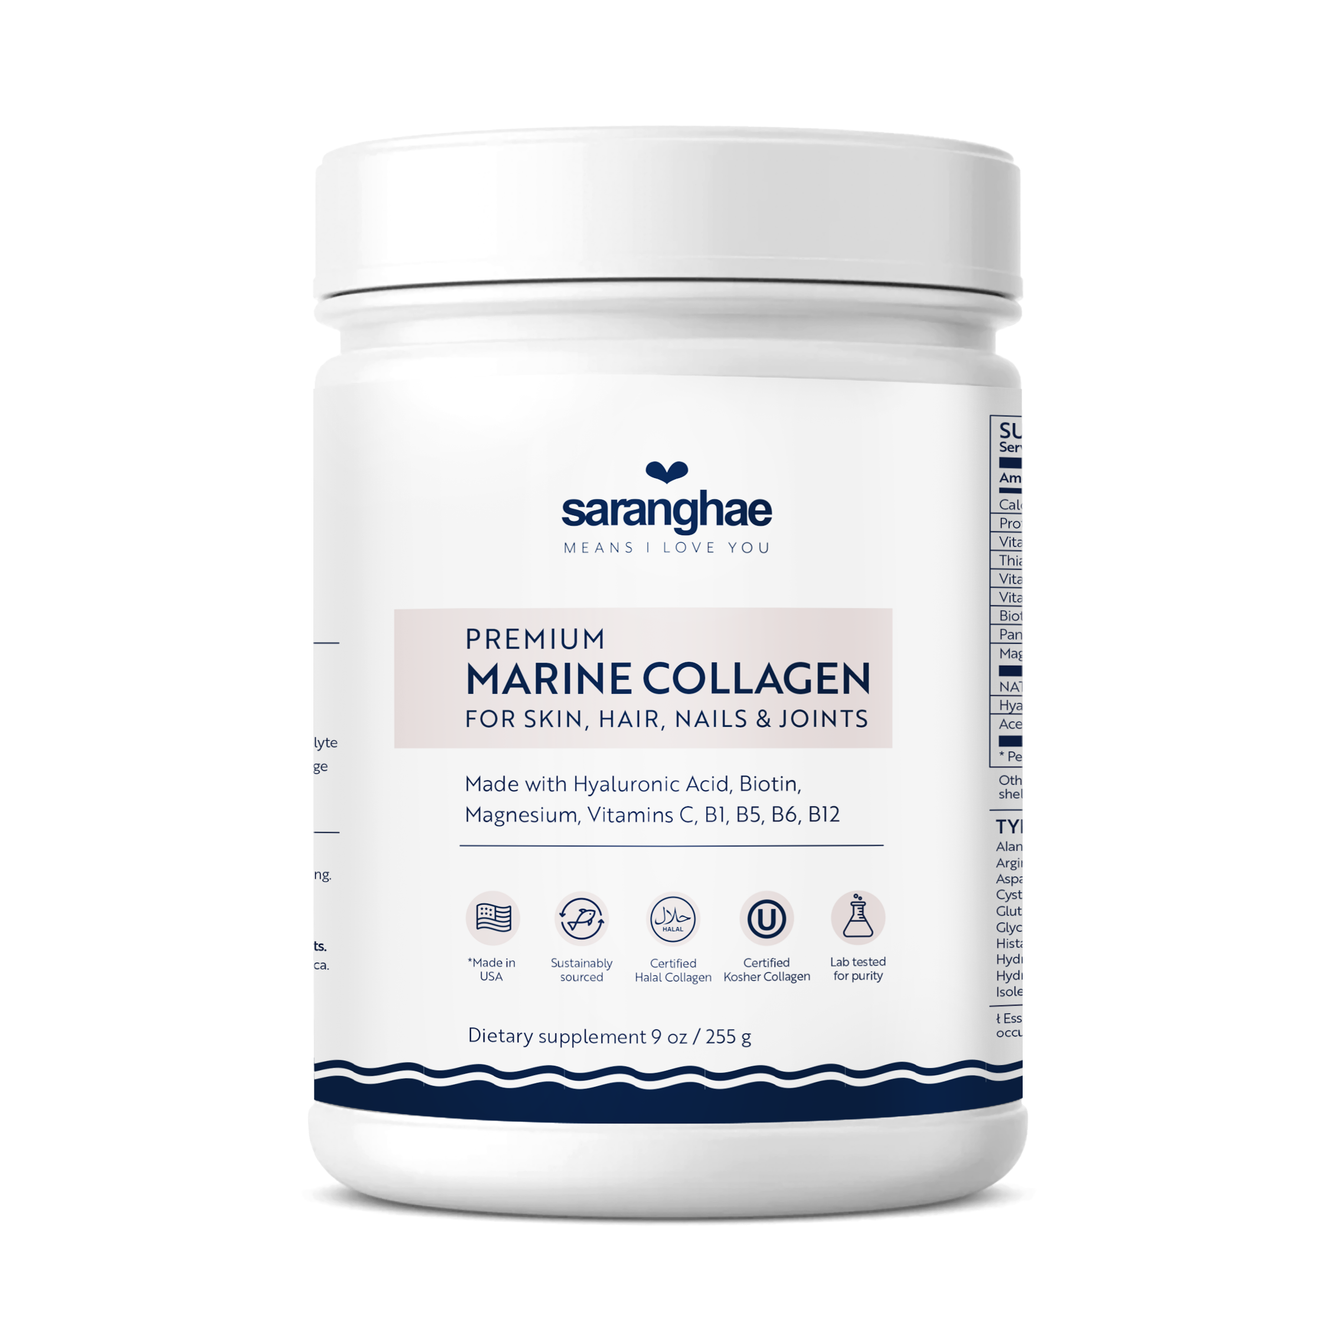 Premium Marine Collagen For Skin, Hair, Nails & Joints